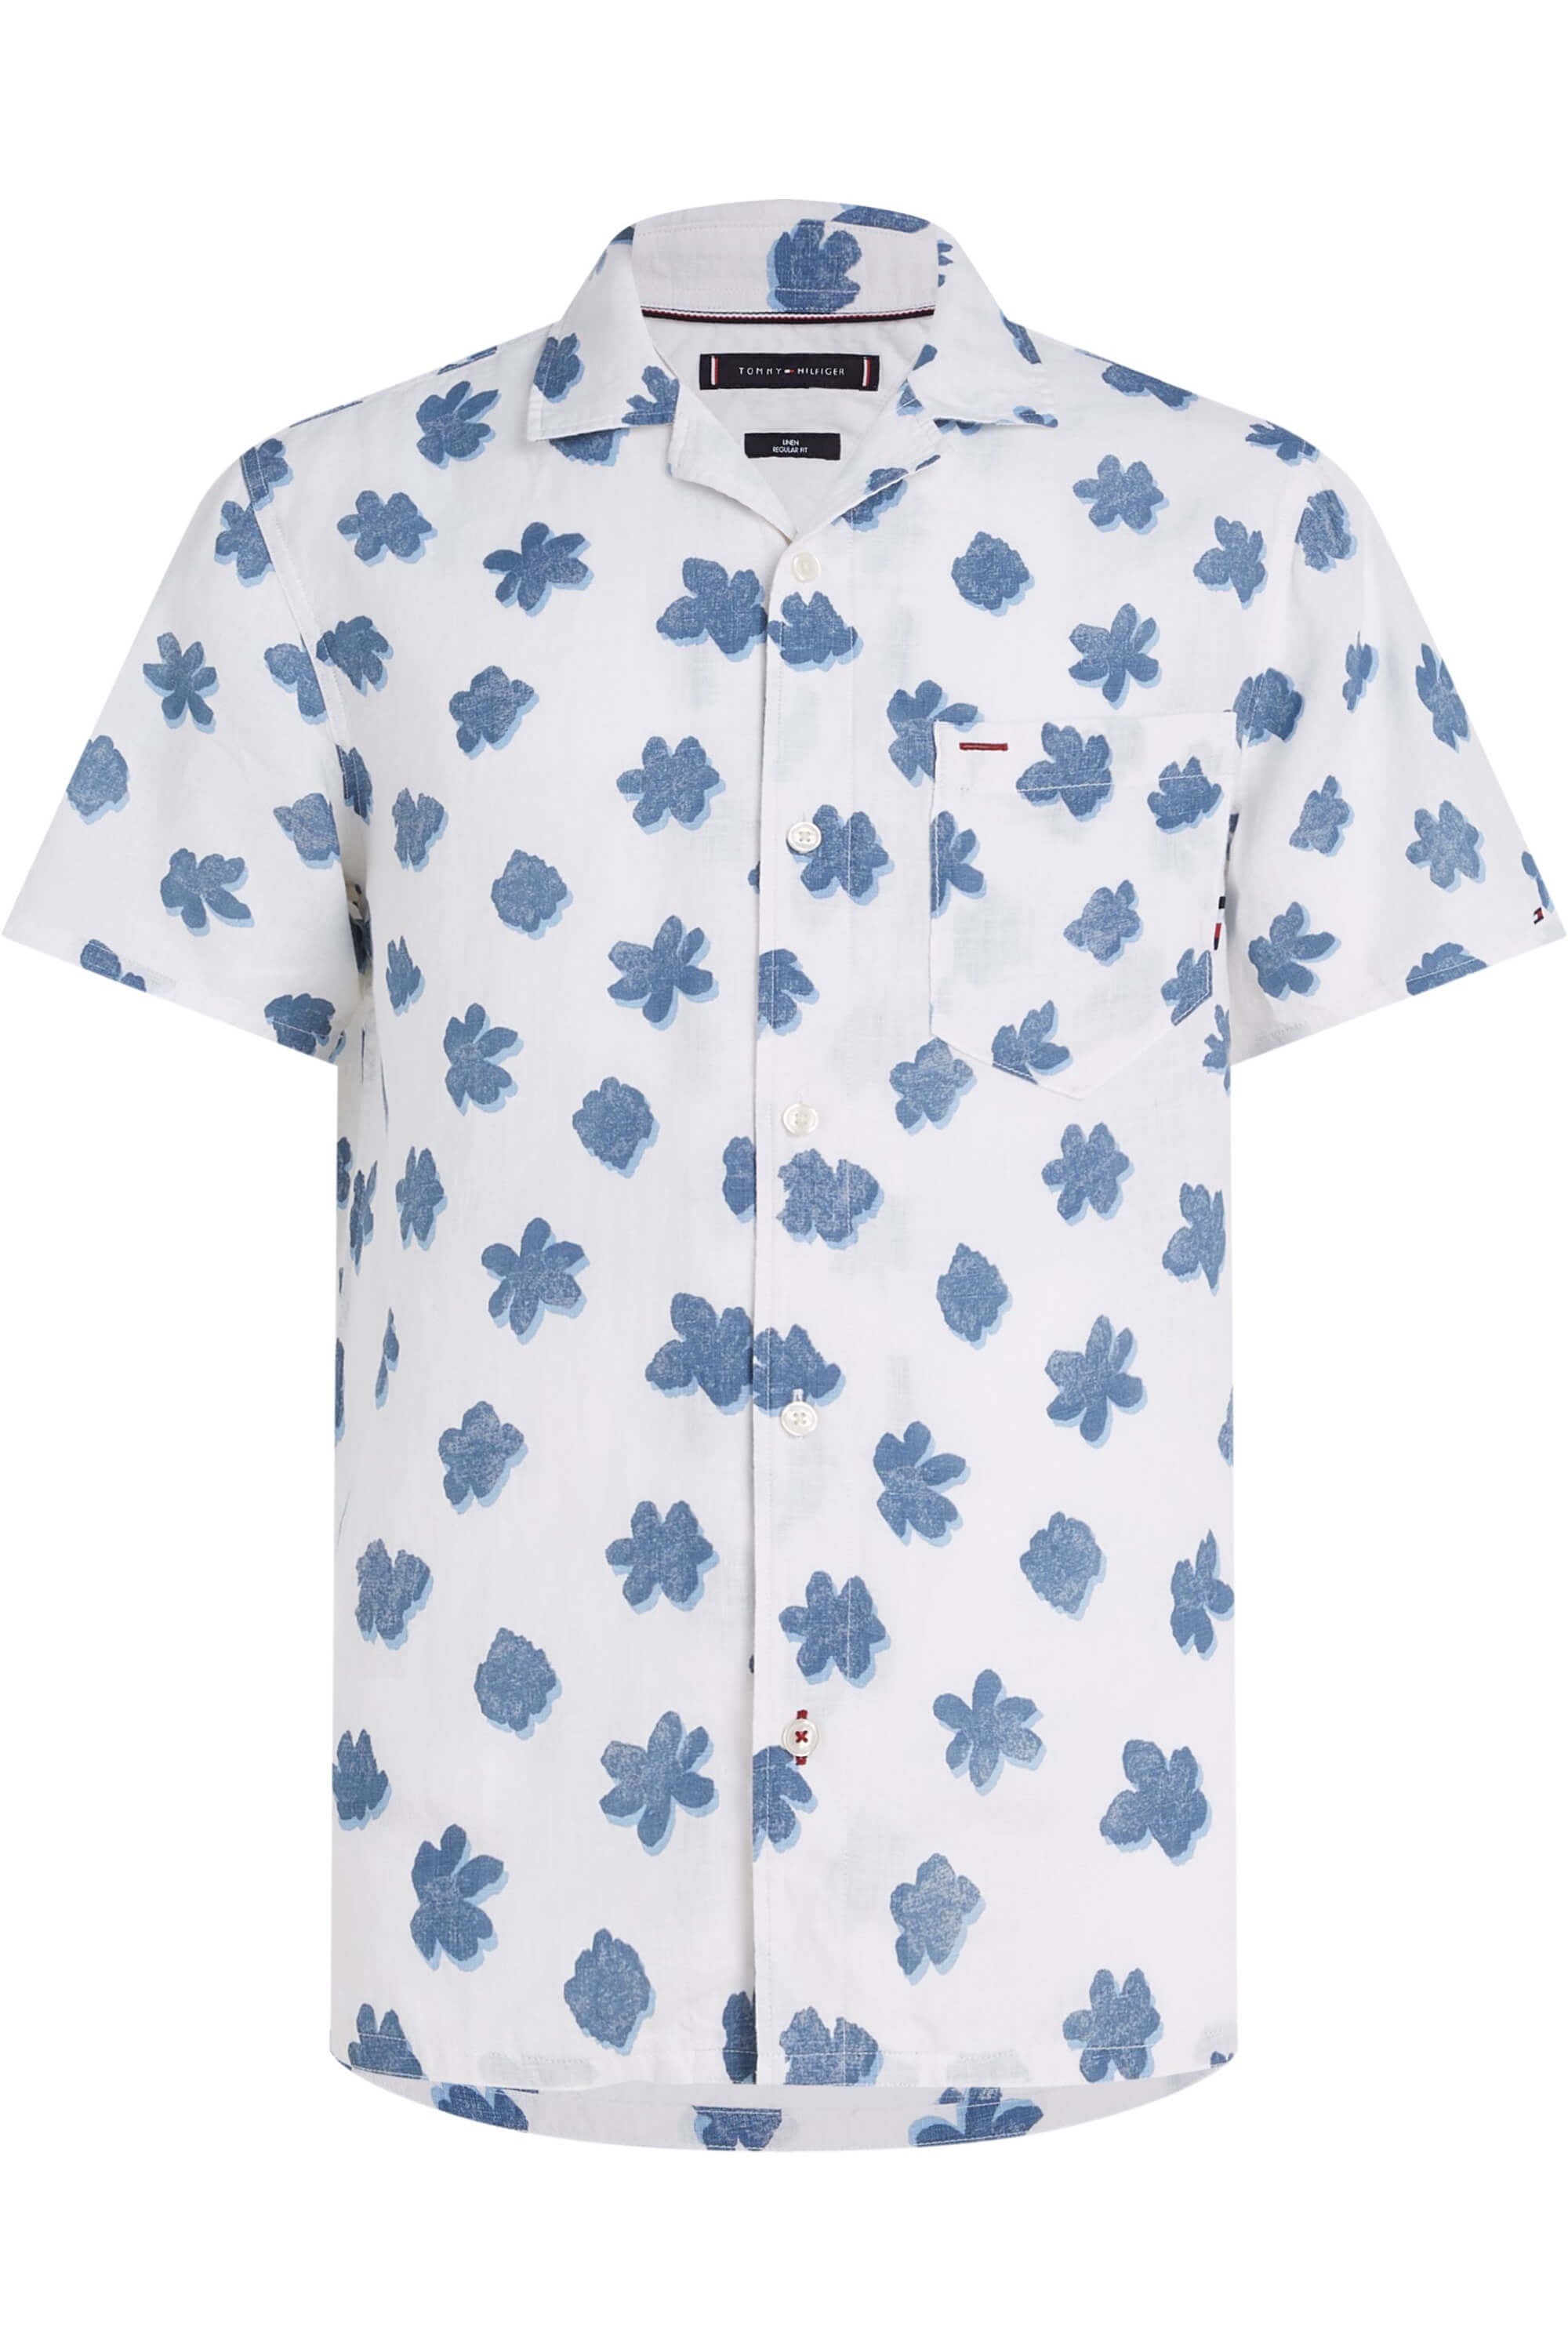 Tommy Hilfiger Mono Flower Shirt White